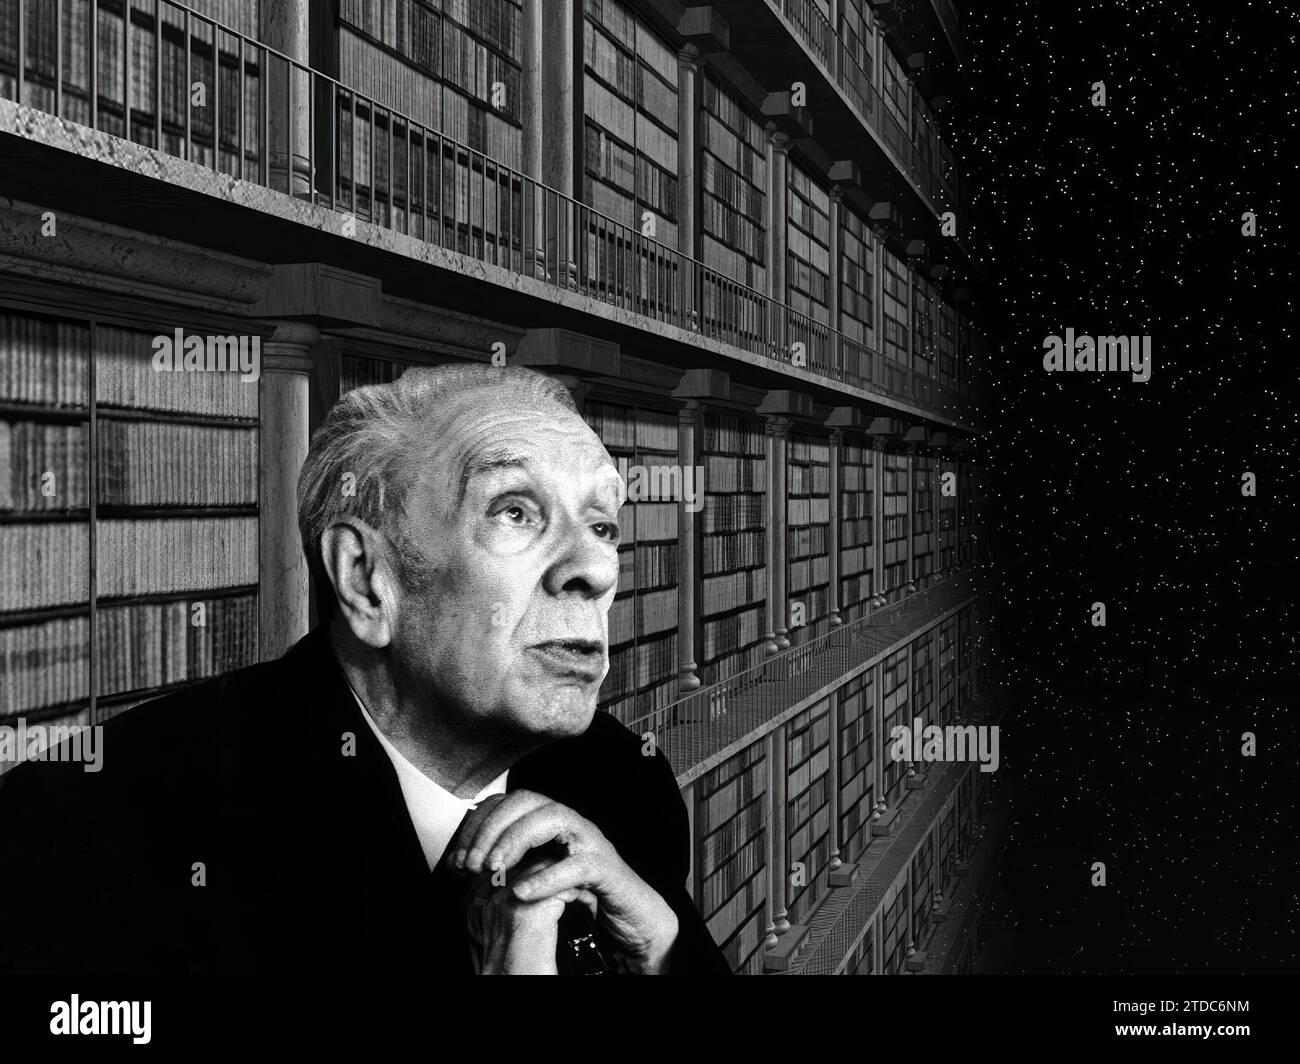 12/31/1969. Jorge Luis Borges. Credit: Album / Archivo ABC Stock Photo